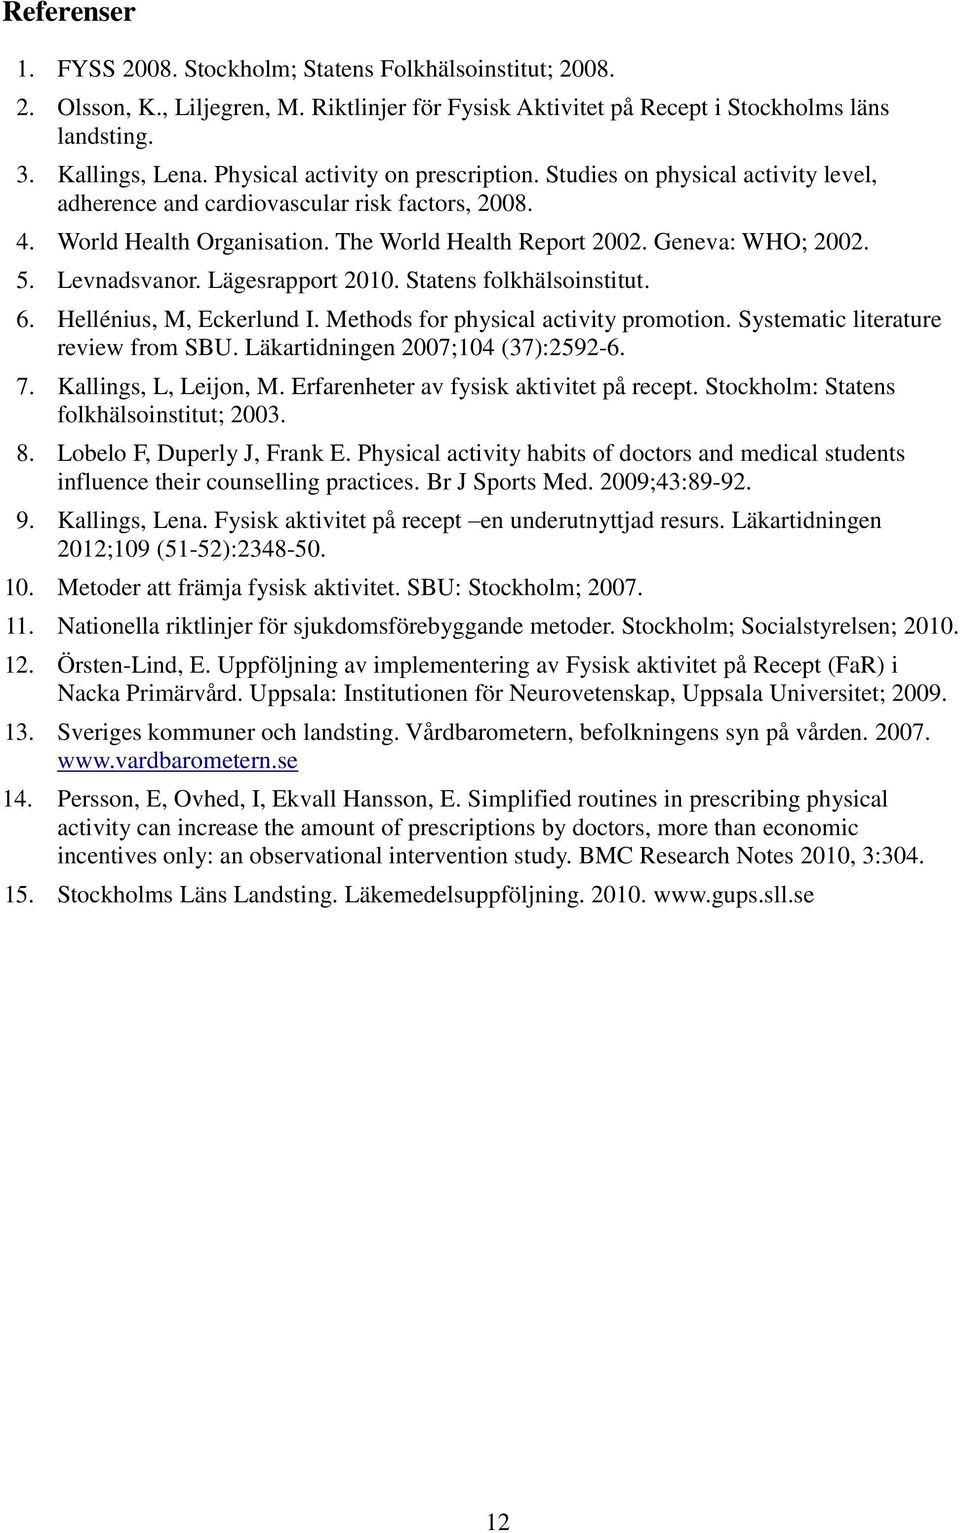 Levnadsvanor. Lägesrapport 2. Statens folkhälsoinstitut. 6. Hellénius, M, Eckerlund I. Methods for physical activity promotion. Systematic literature review from SBU. Läkartidningen 27;4 (37):2592-6.